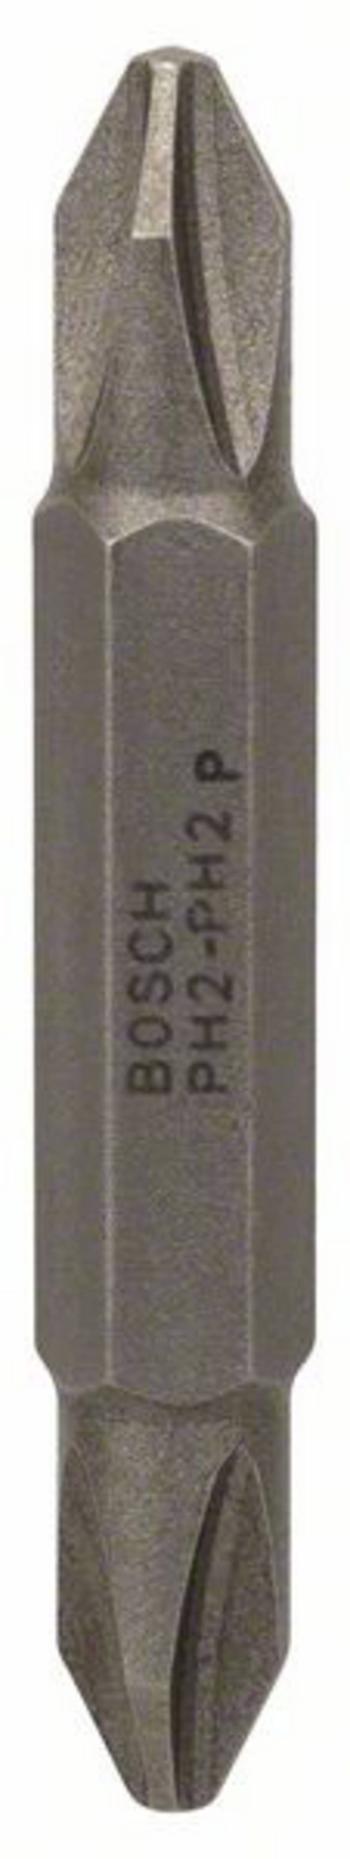 Bosch Accessories  2607001740 obojstranný bit PH 2    1 ks